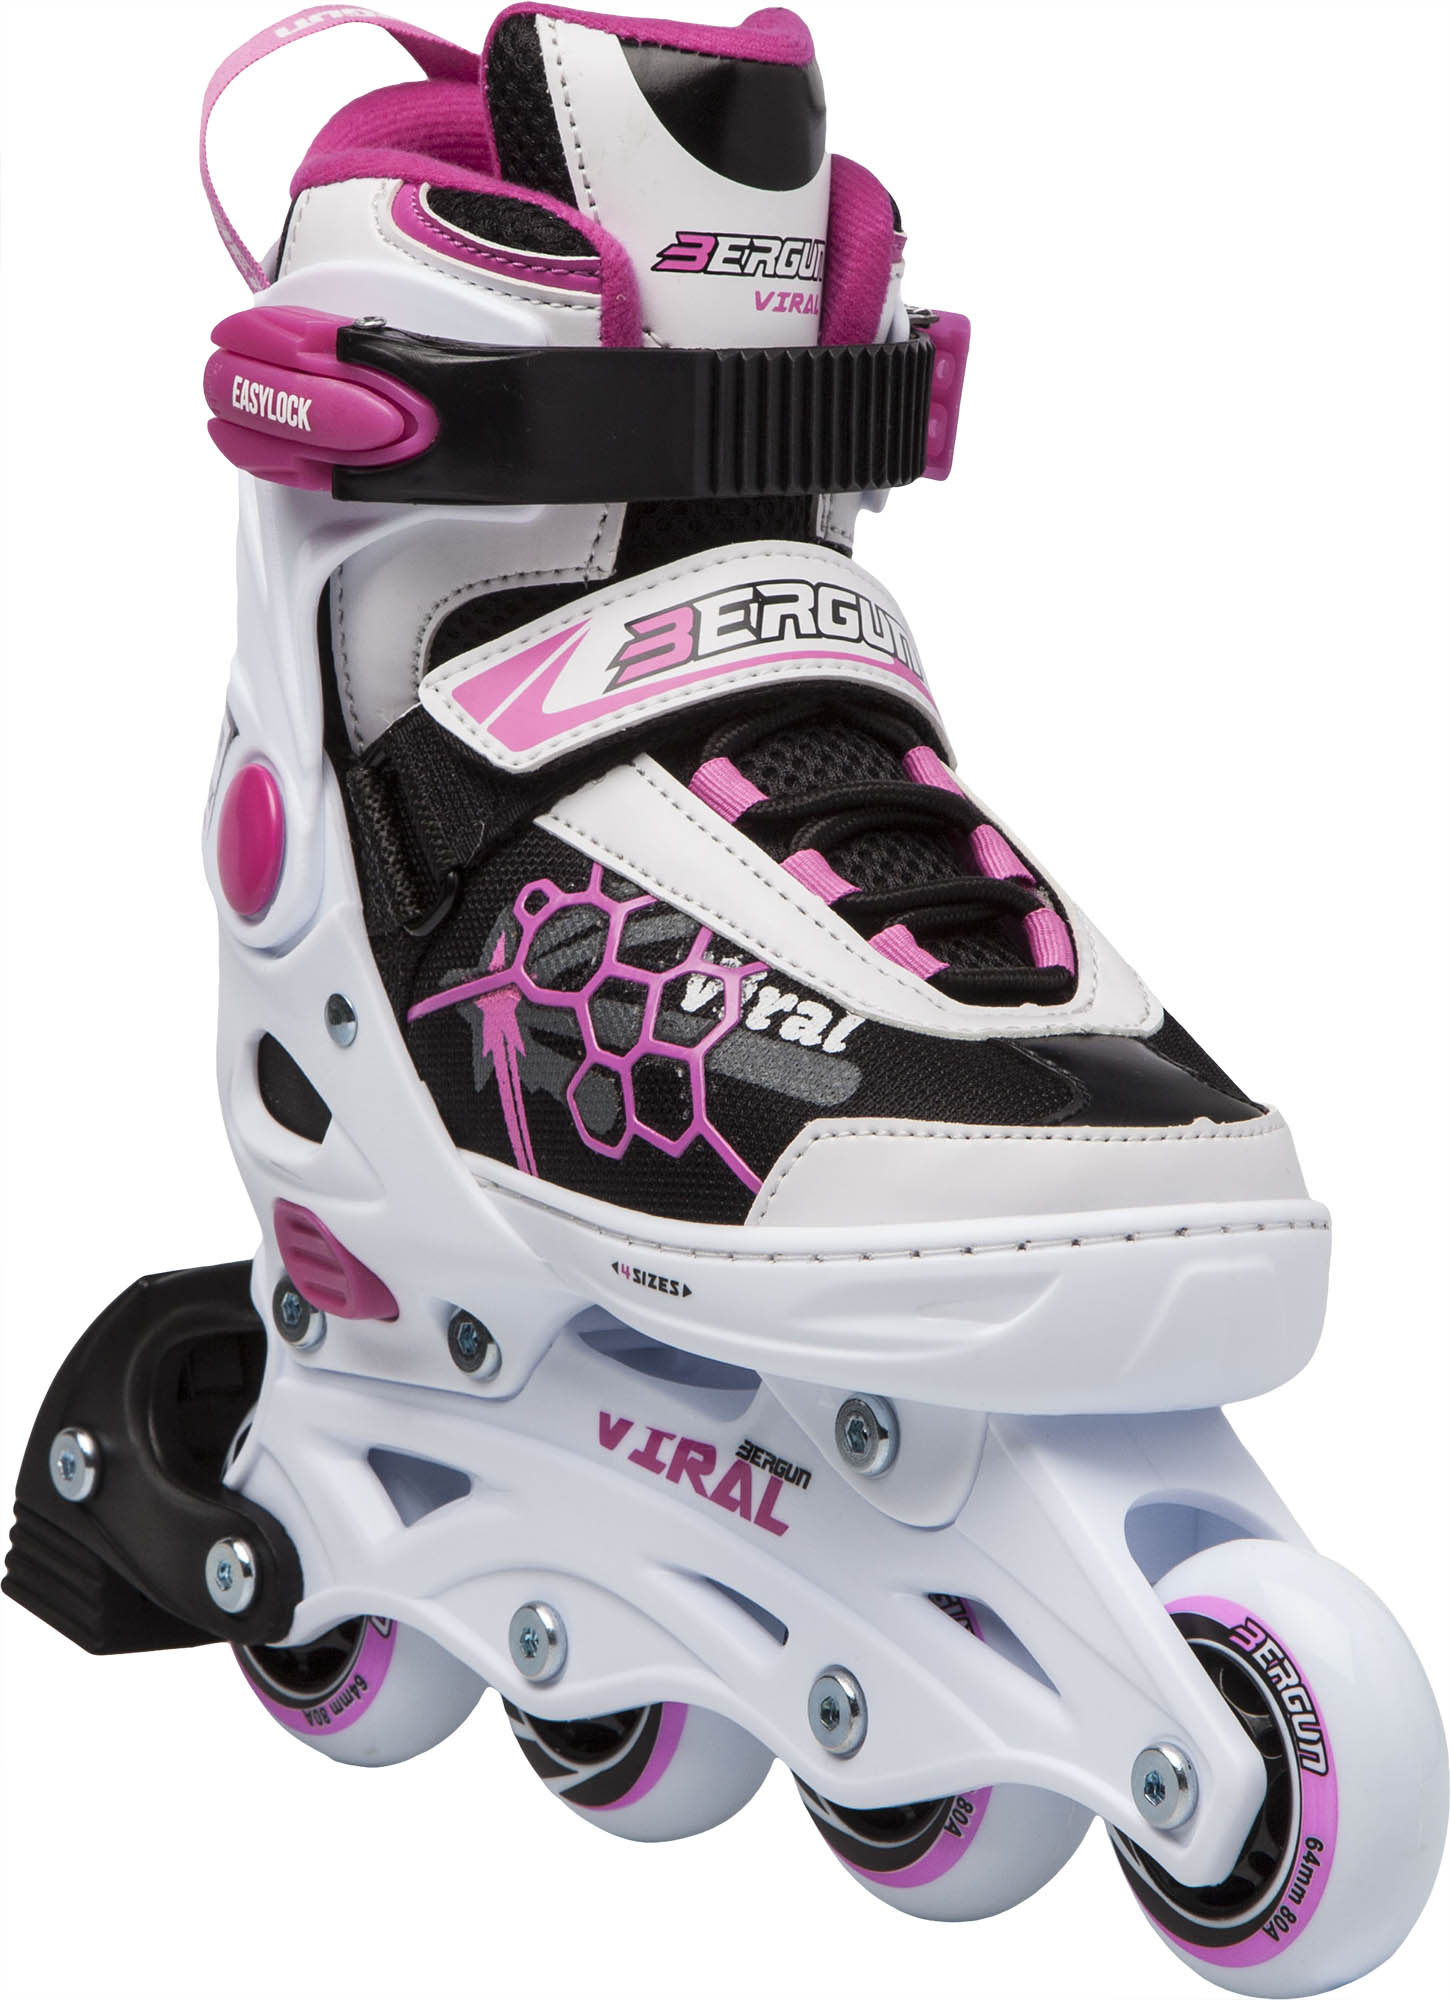 Girls’ inline skates